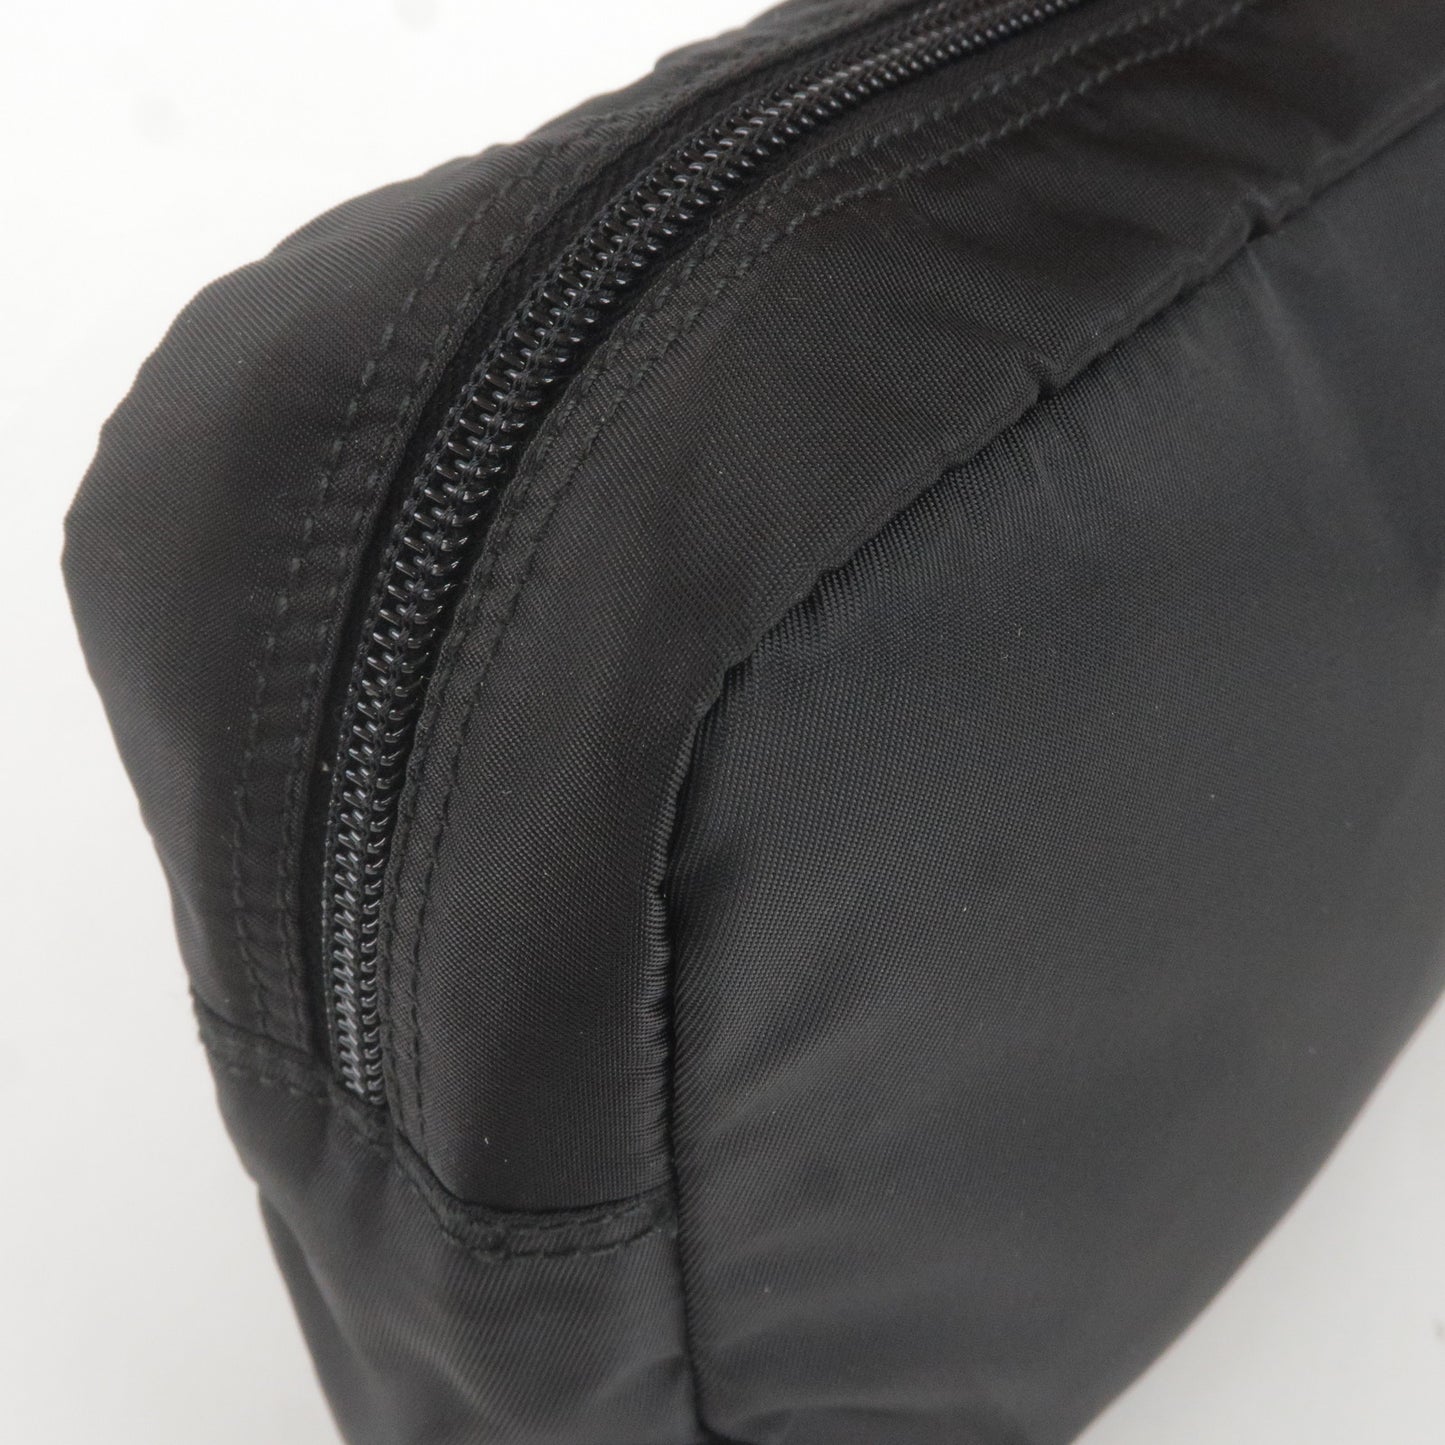 PRADA Logo Nylon Leather Pouch Cosmetic Bag NERO Black MV348